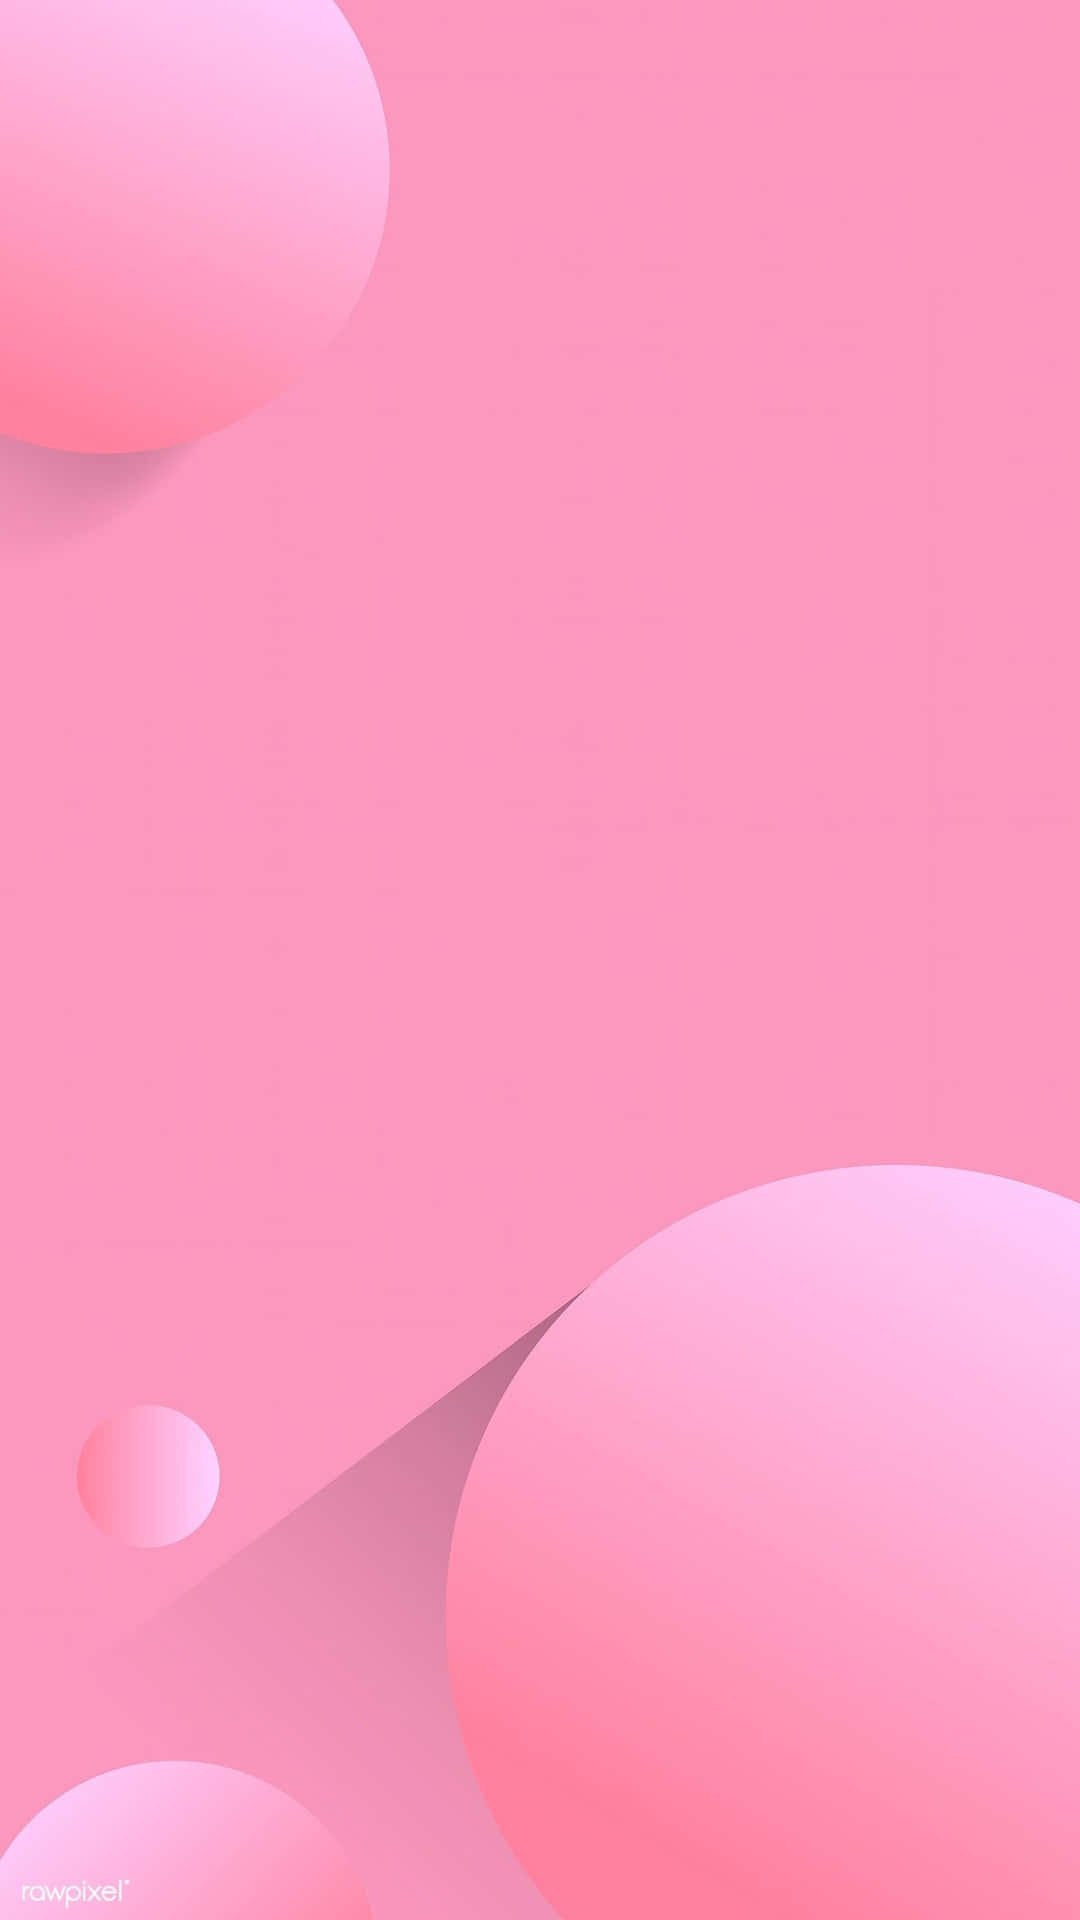 Minimalistic Pink Sphere Art Wallpaper